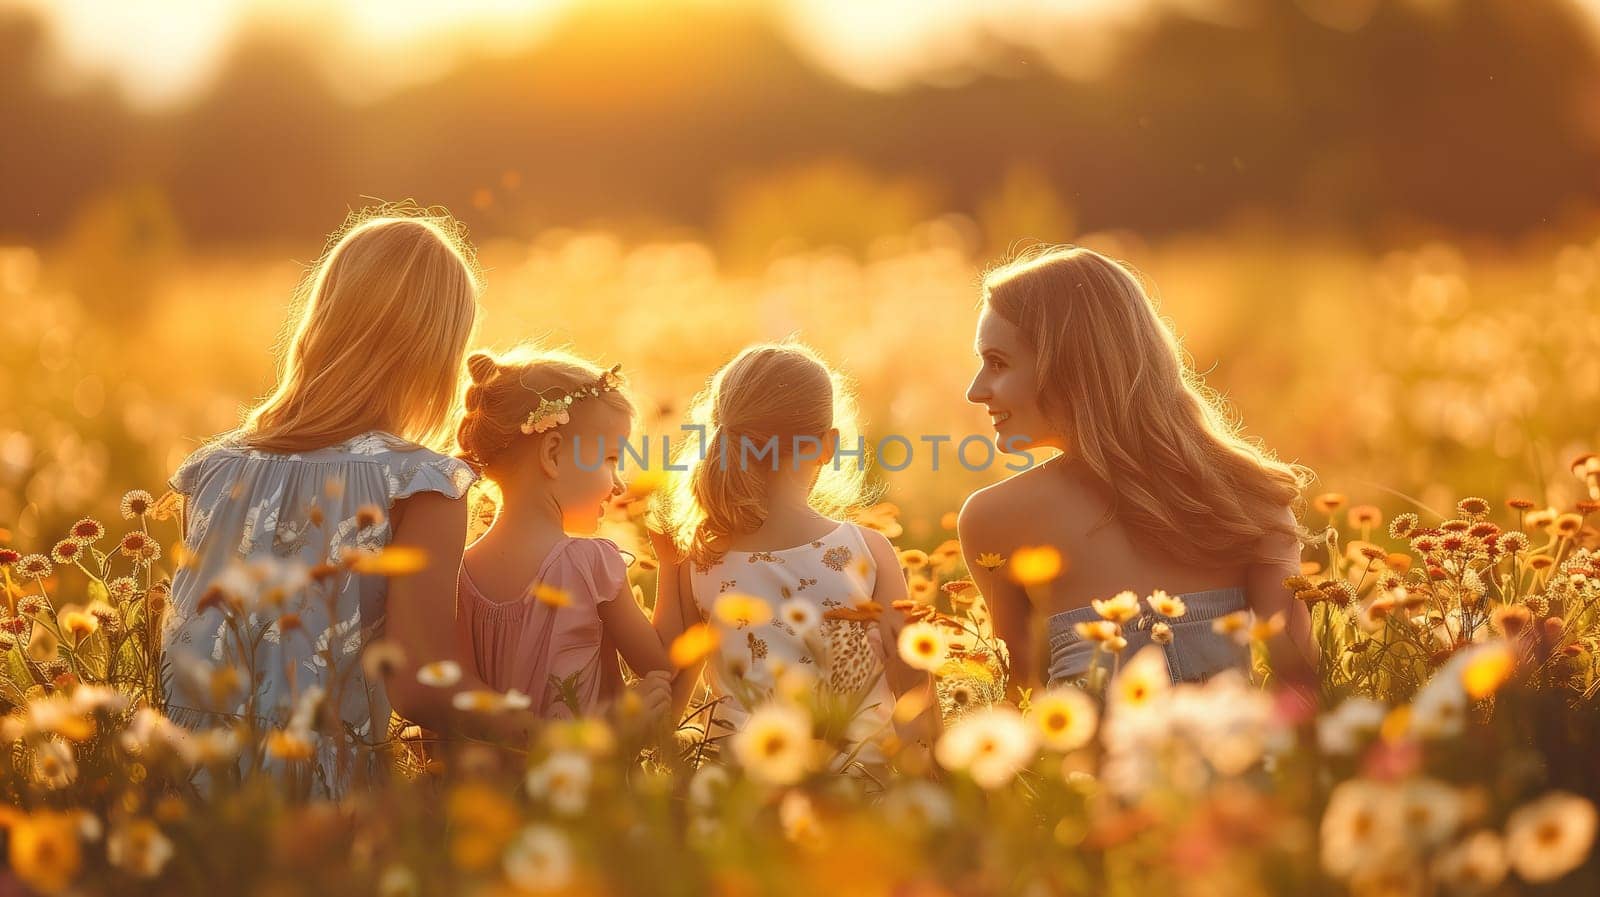 Girls Sitting in Field of Flowers by TRMK